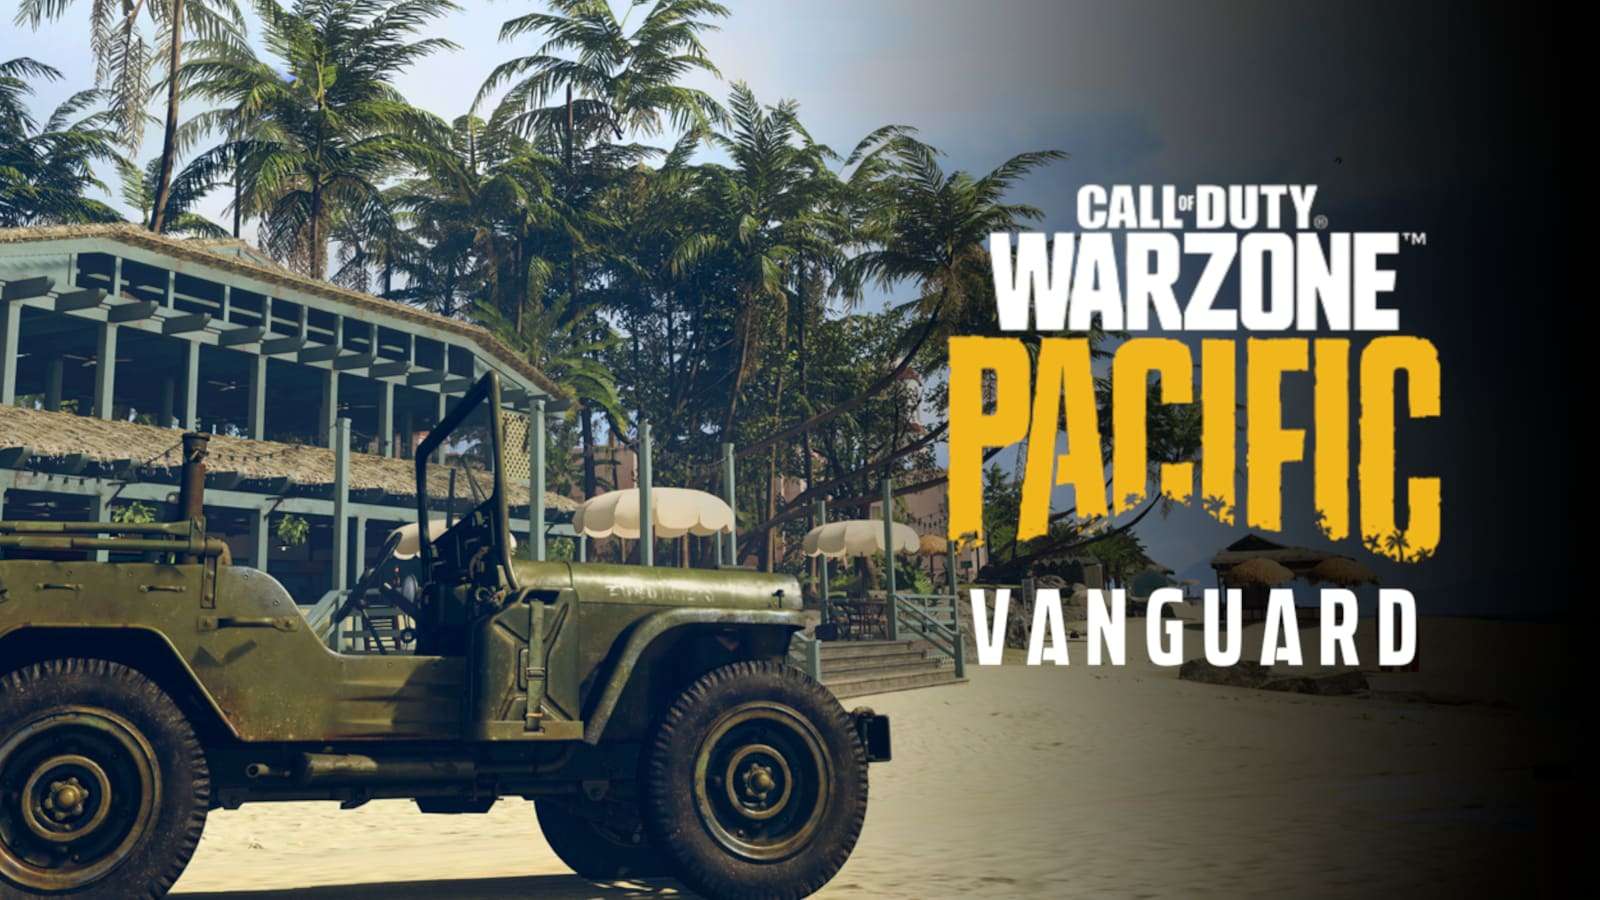 call of duty warzone pacific vanguard season 1